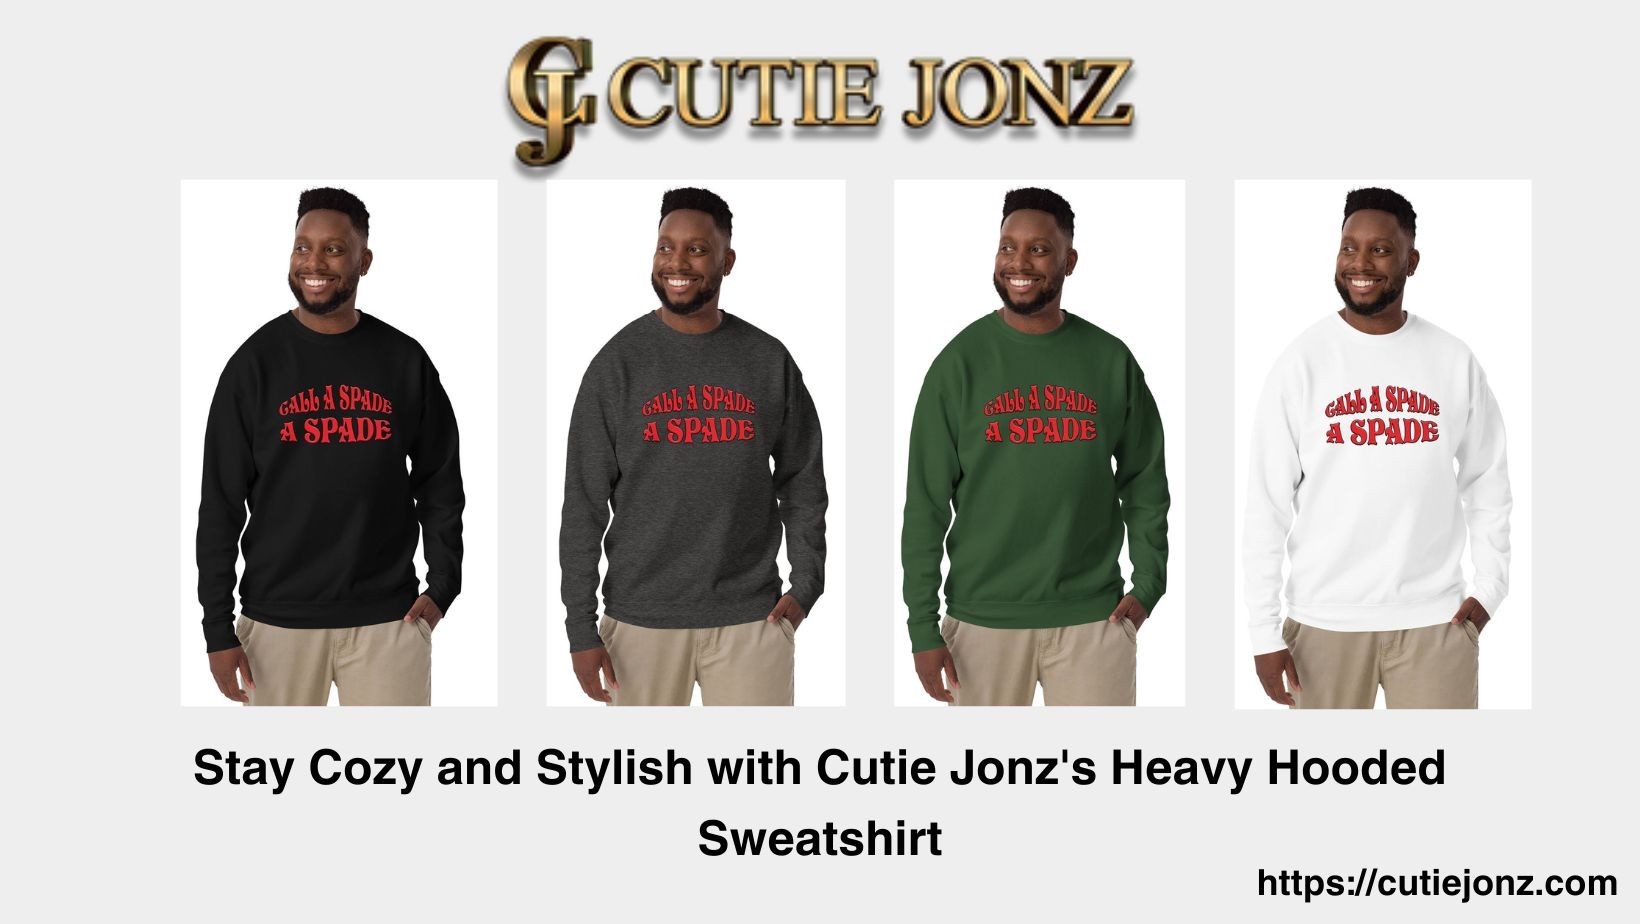 Stay Cozy and Stylish with Cutie Jonz's Heavy Hooded Sweatshirt